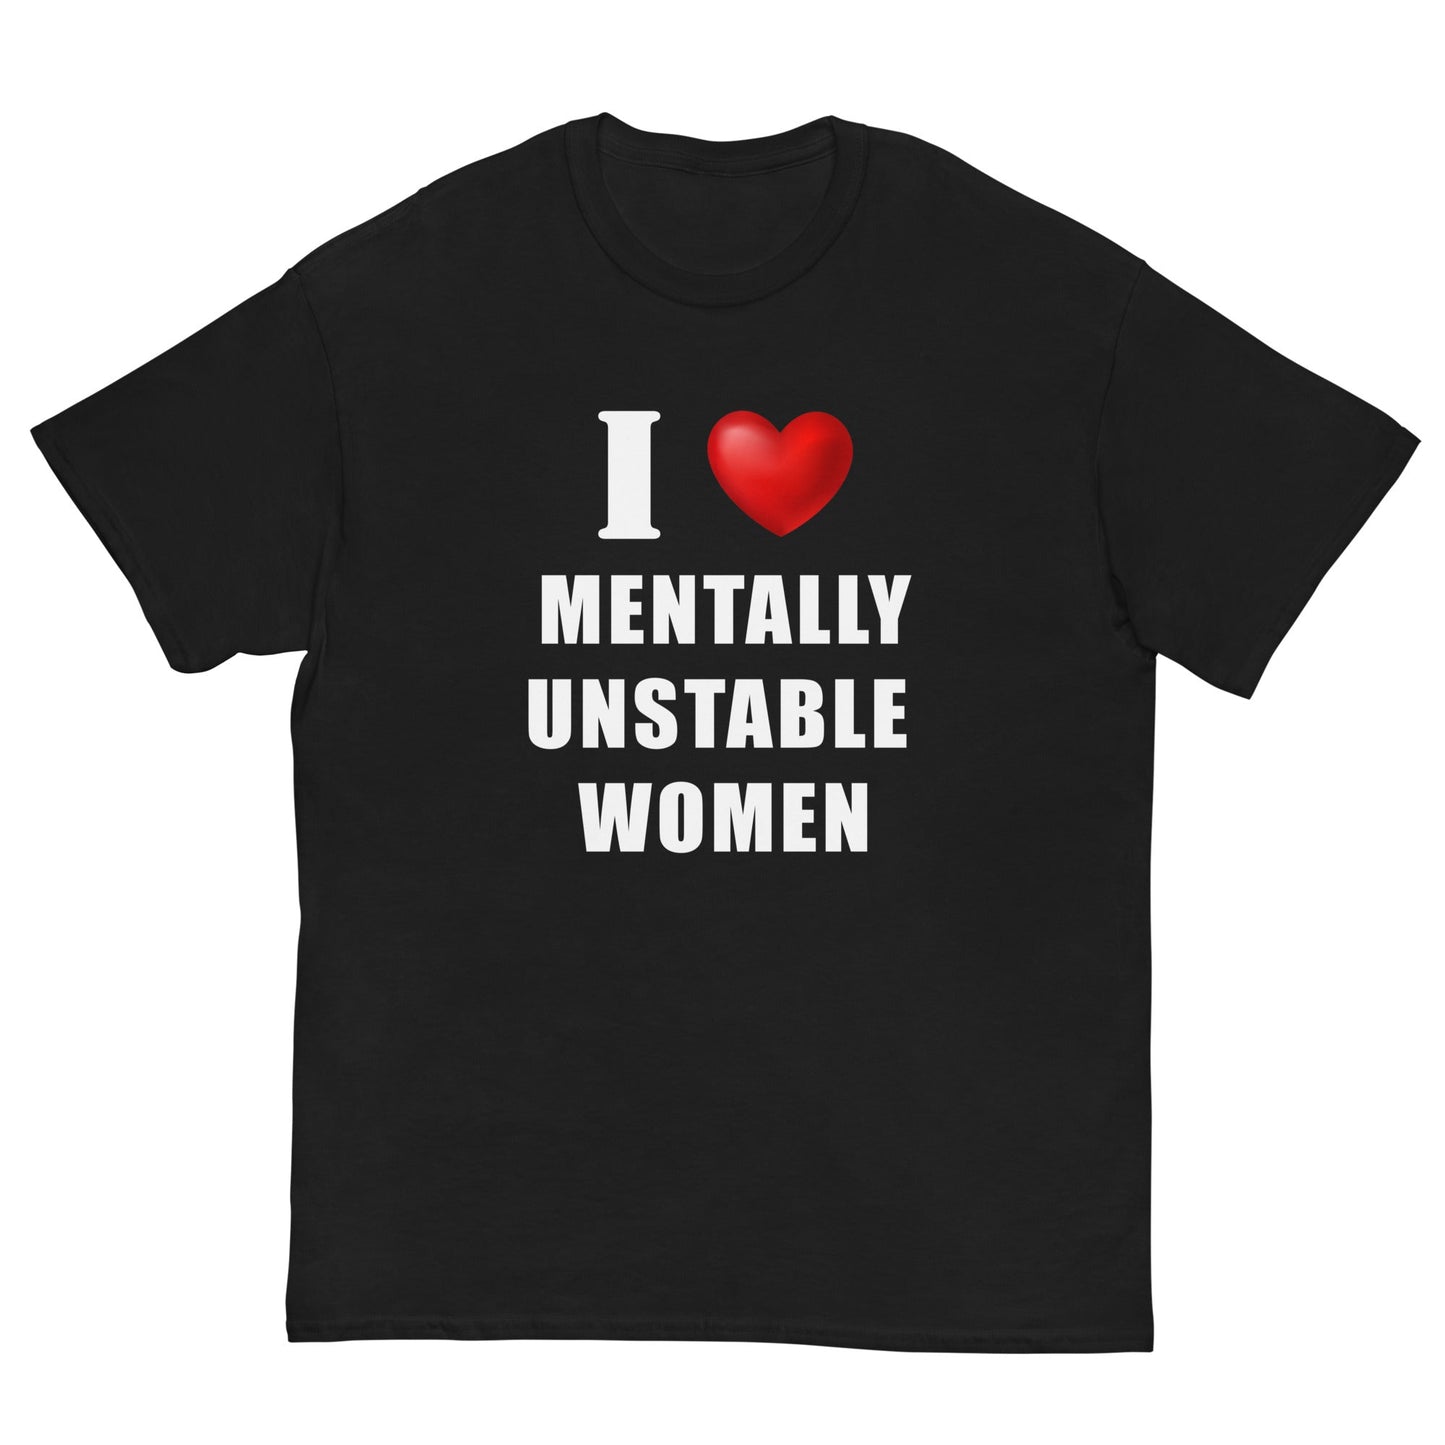 I LOVE MENTALLY UNSTABLE WOMEN - HardShirts